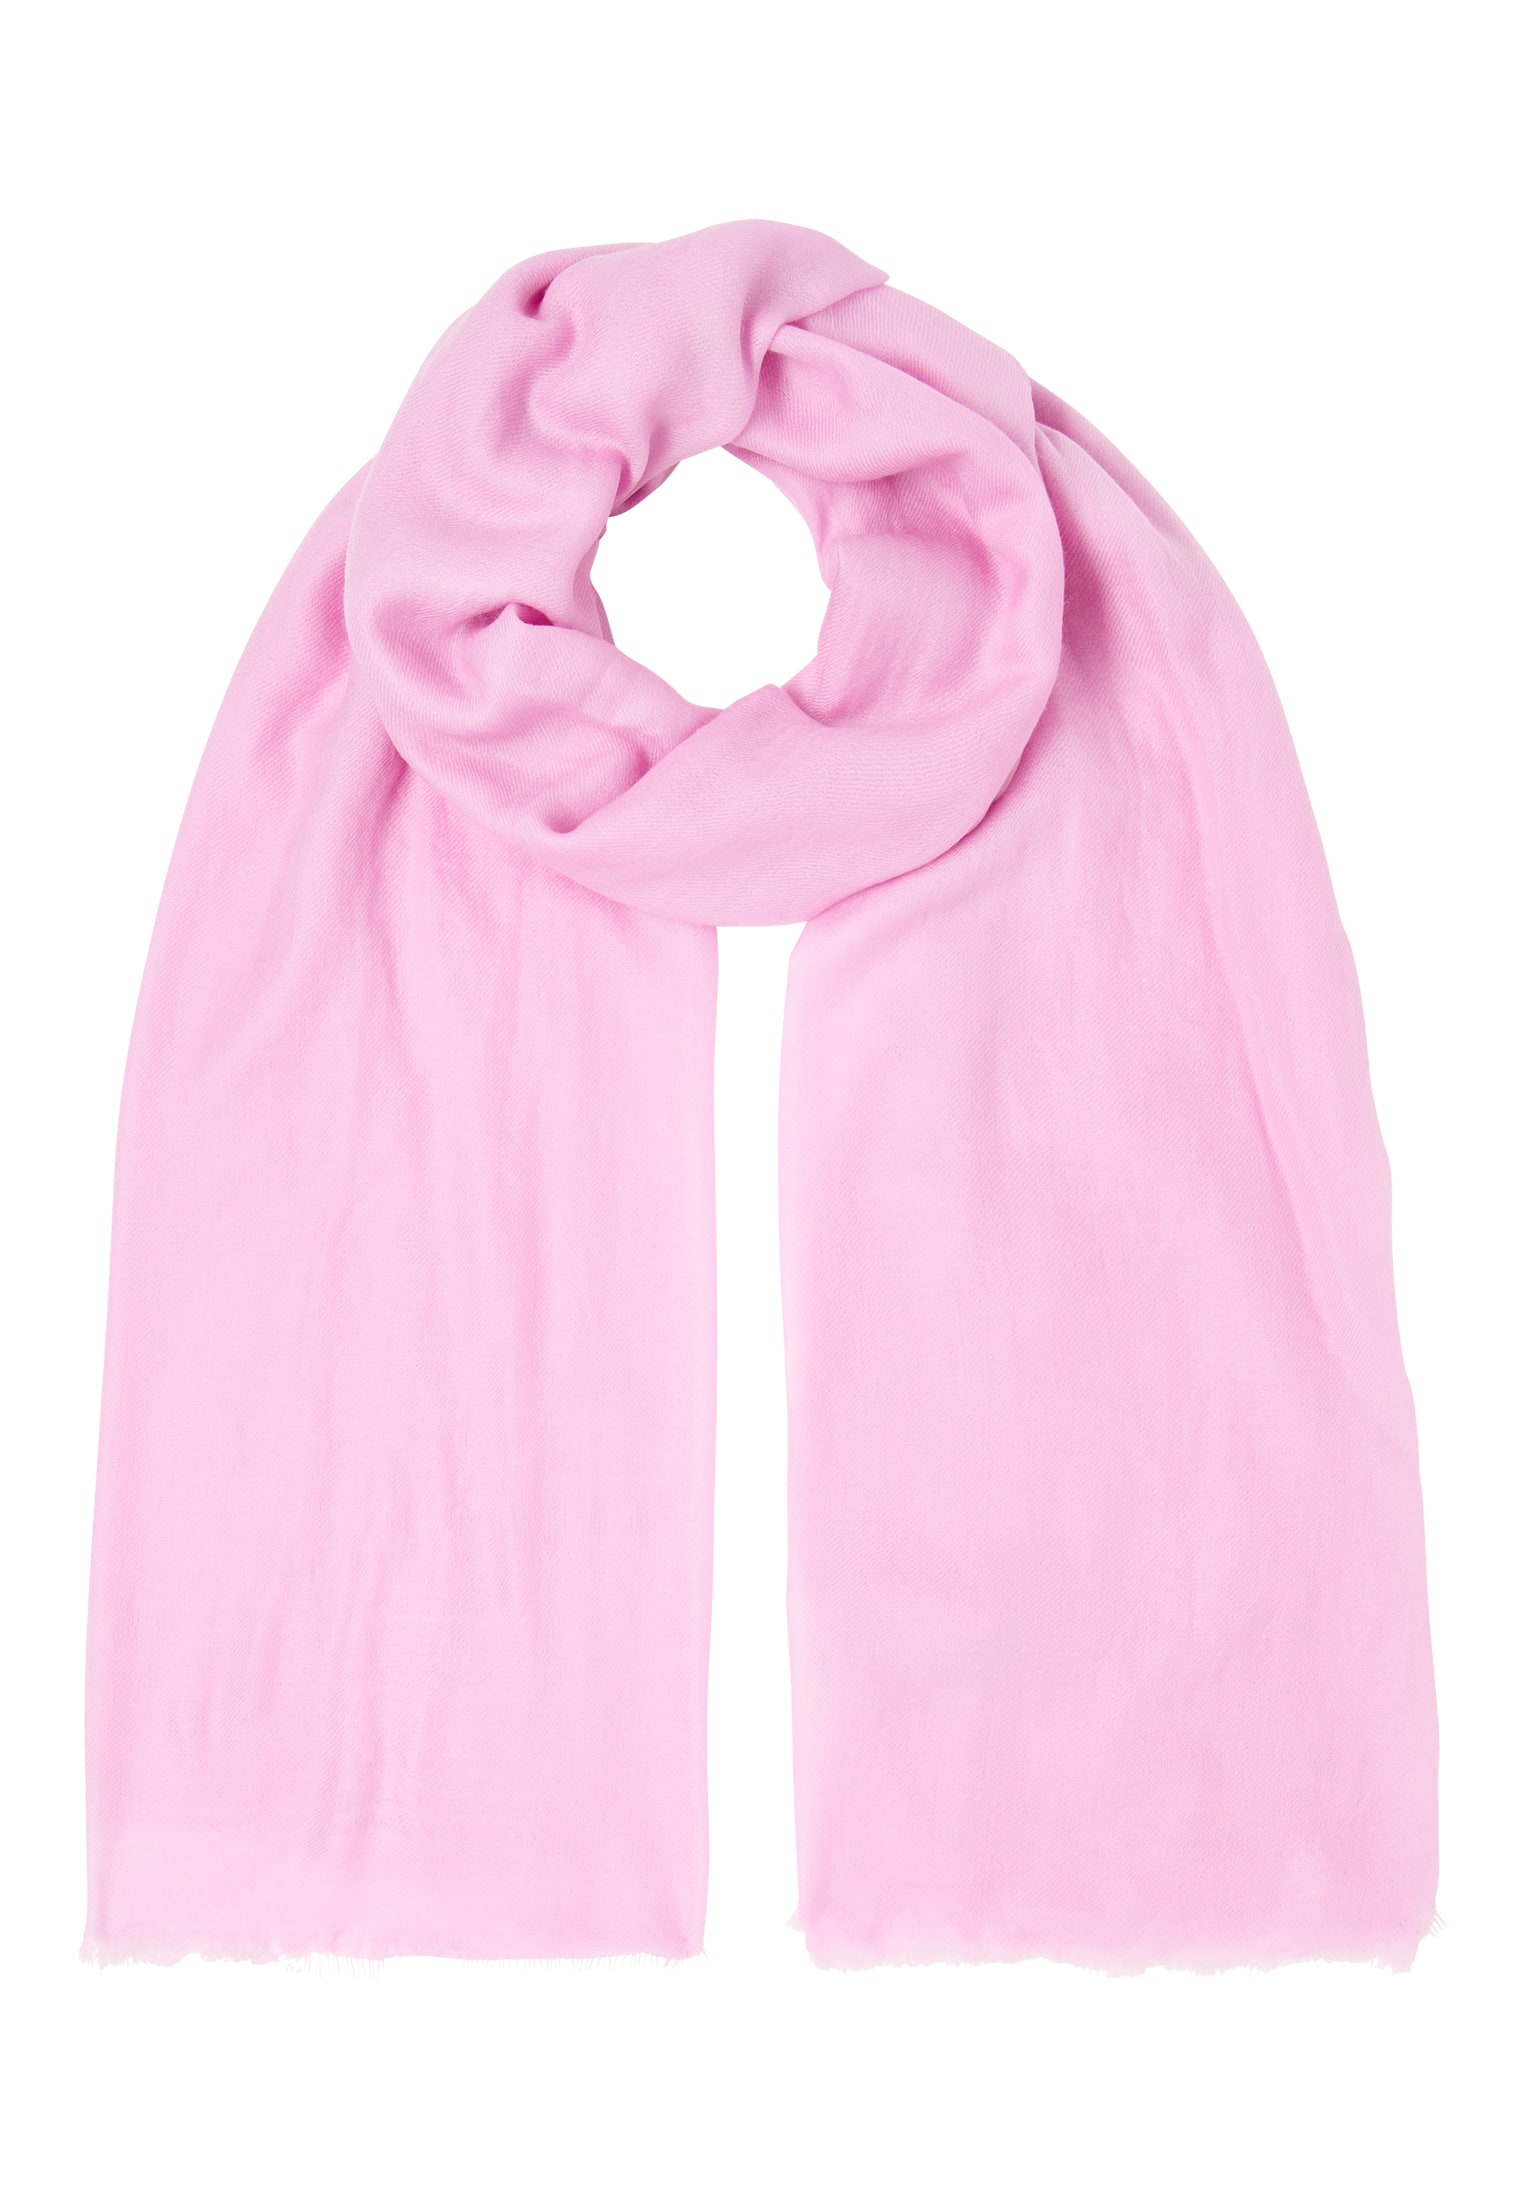 soft unifarben 2AC00067-15-12-OS Schal in pink soft | OS pink | |